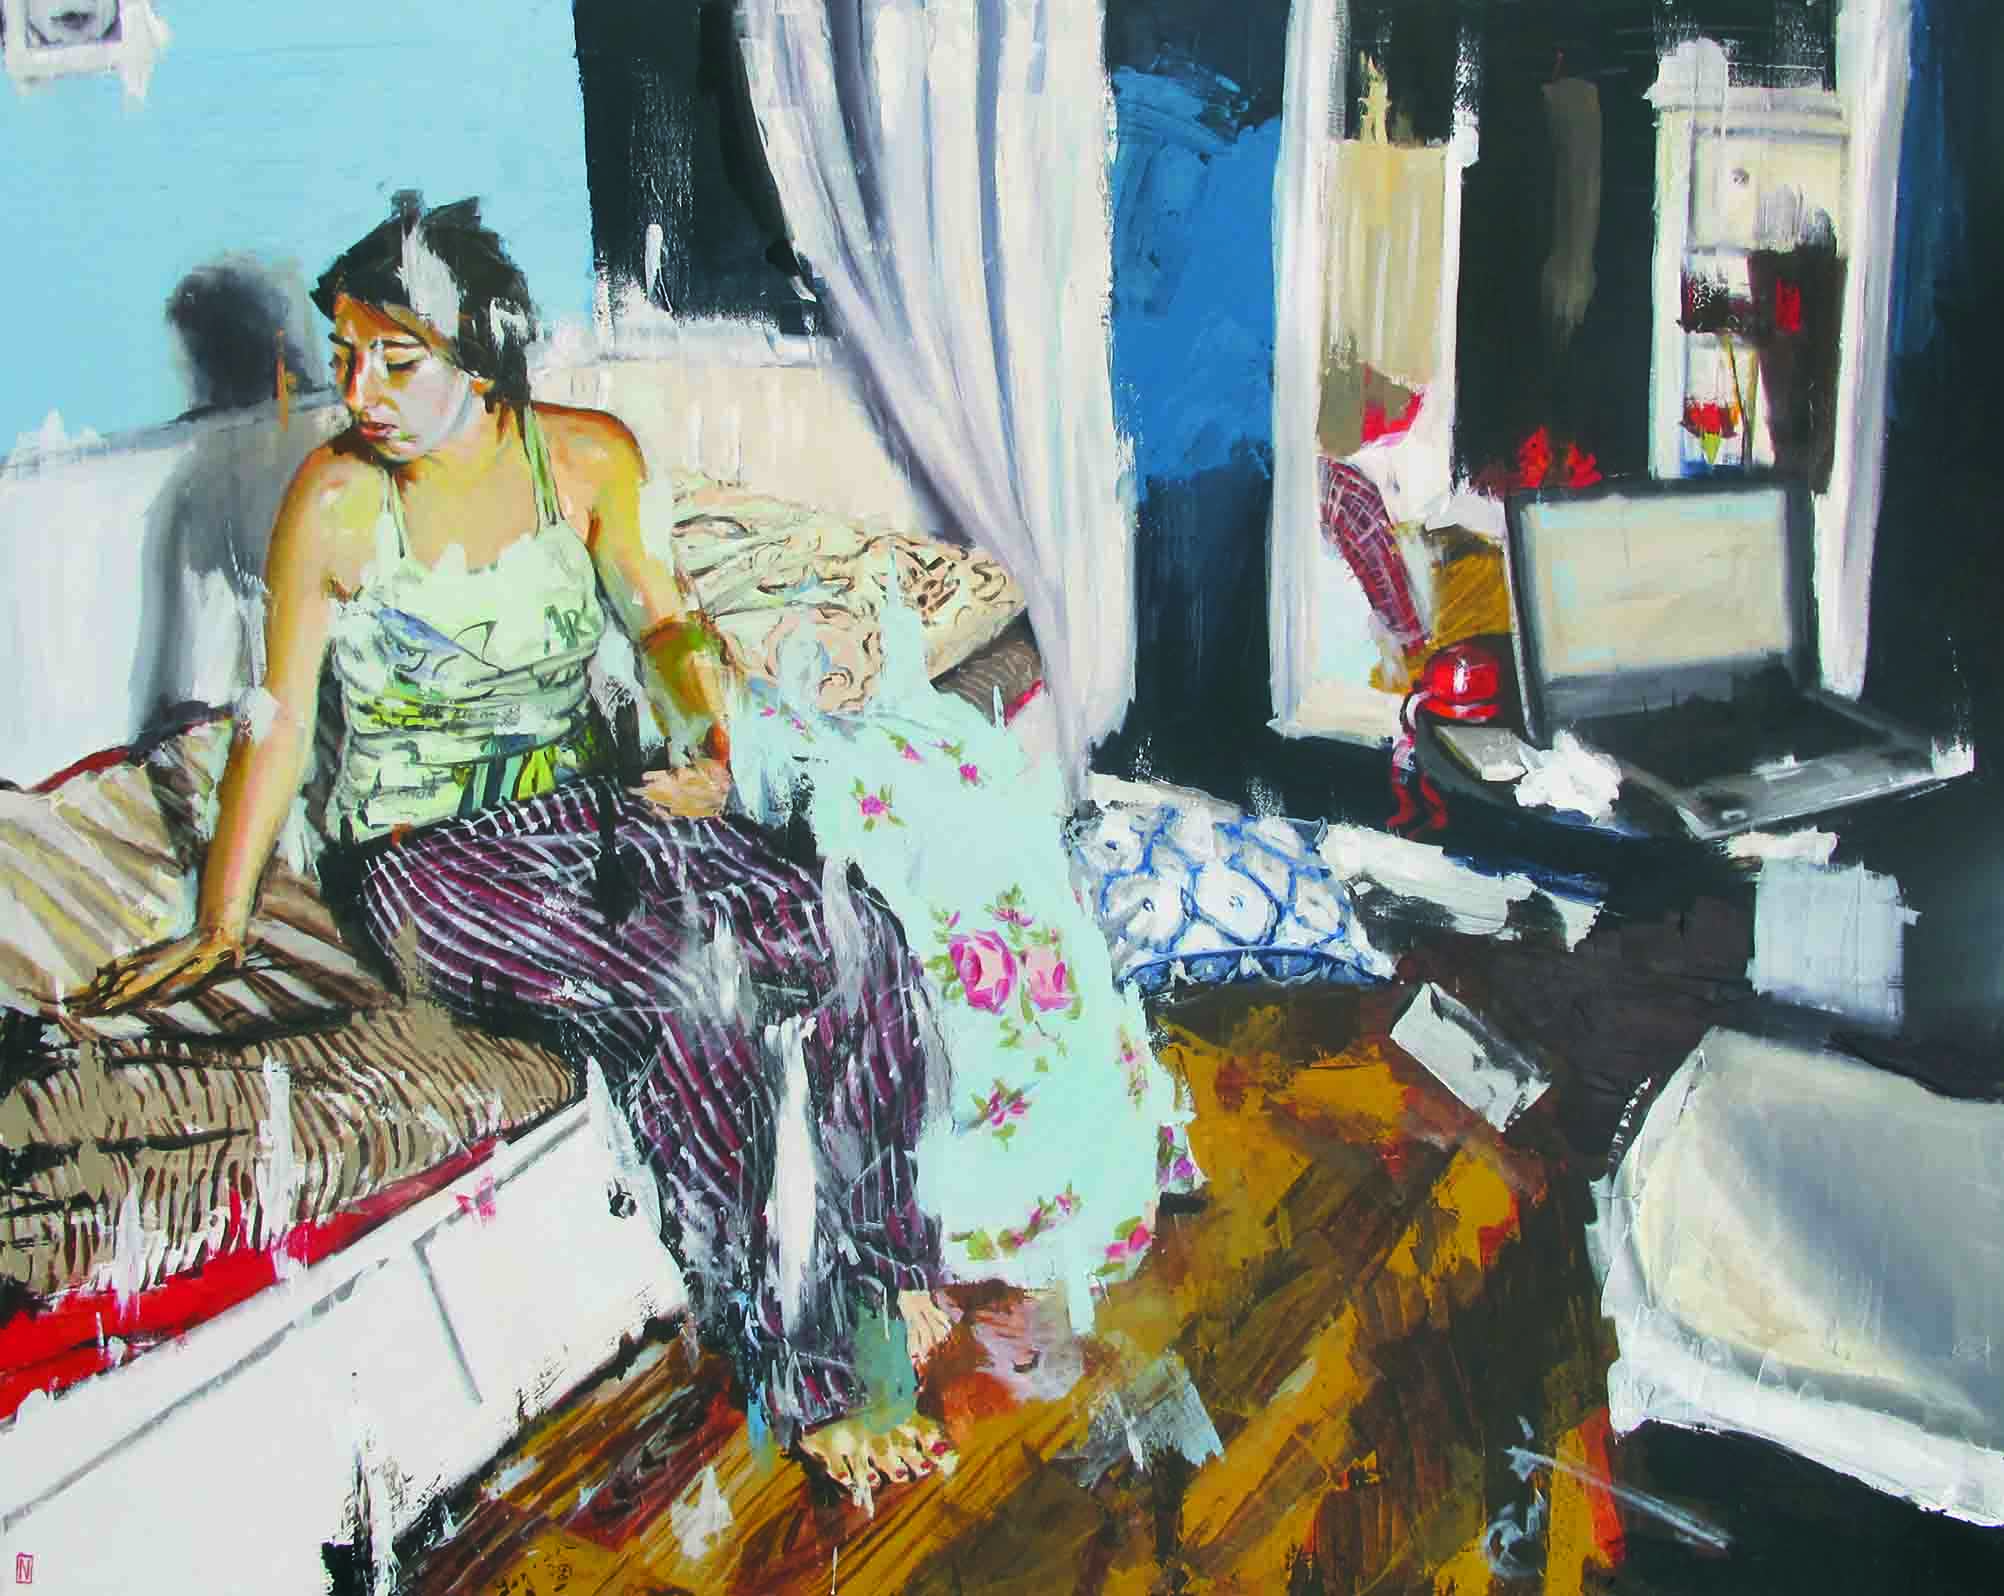 İsimsiz- Untitled, 2012, Tuval üzerine yağlıboya- Oil on canvas, 150X190 cm